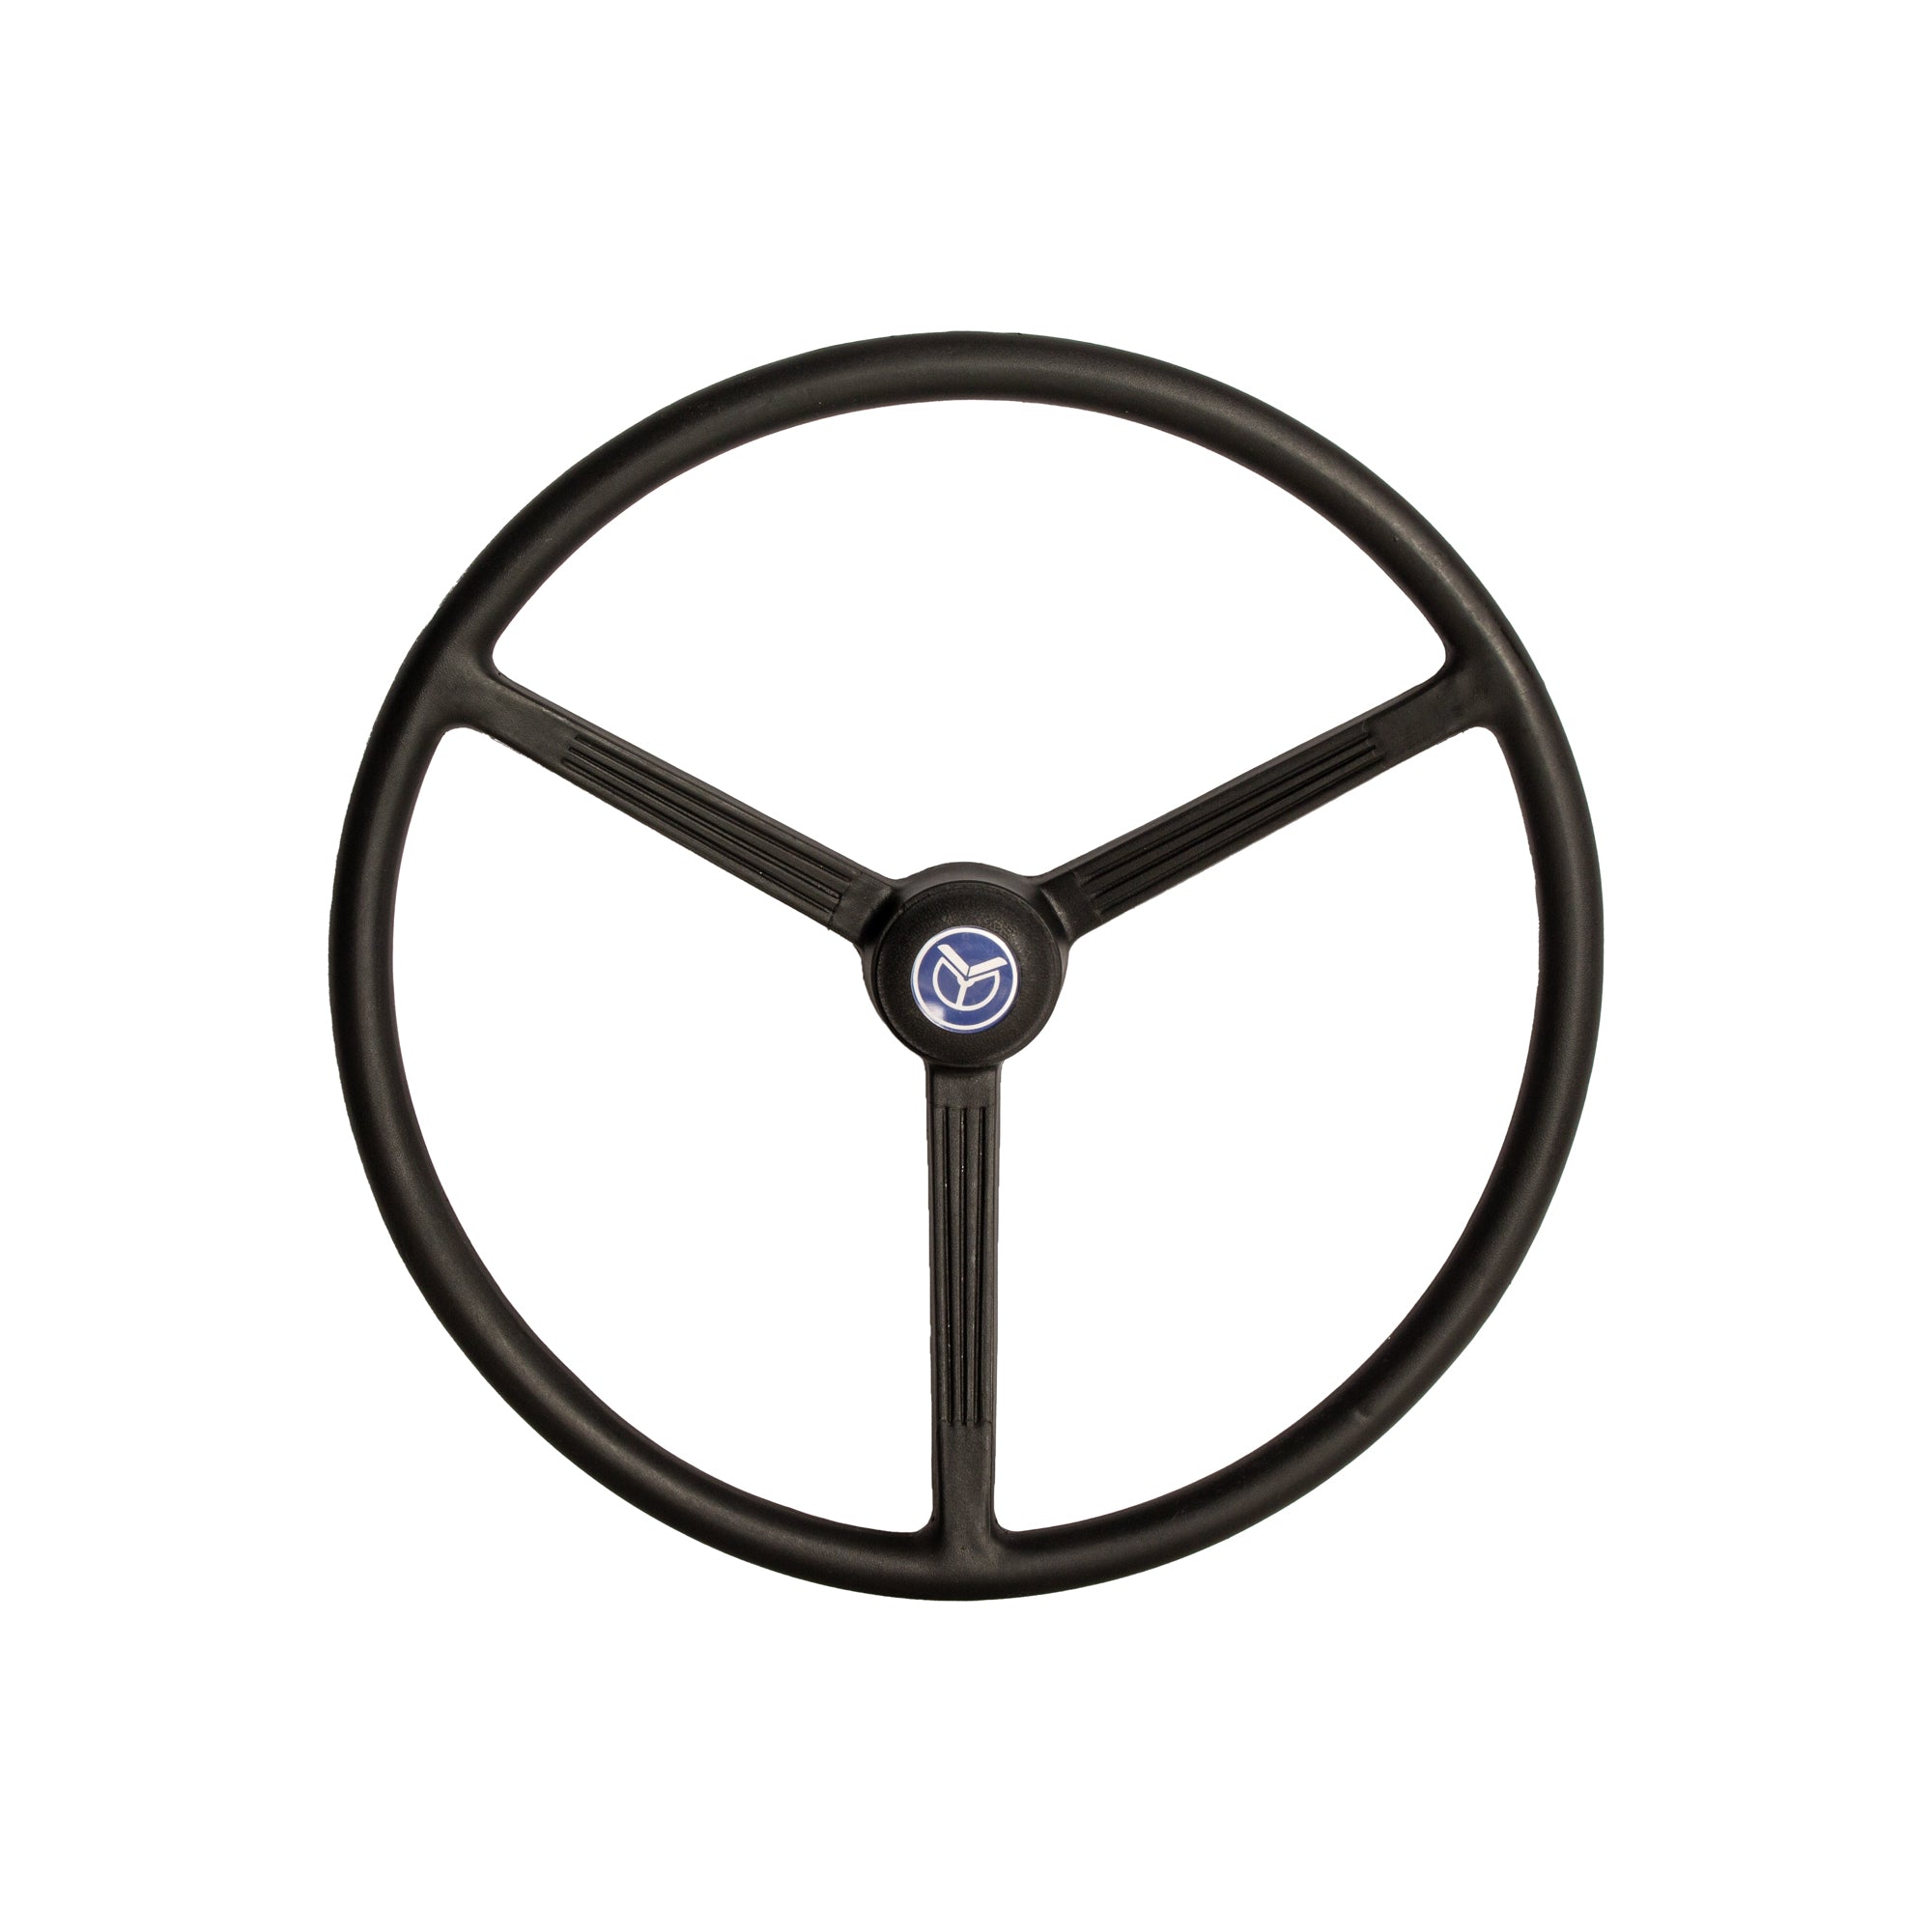 Black Steering Wheel Replacement for FORD Tractor Dexta Super Dexta 957E3600